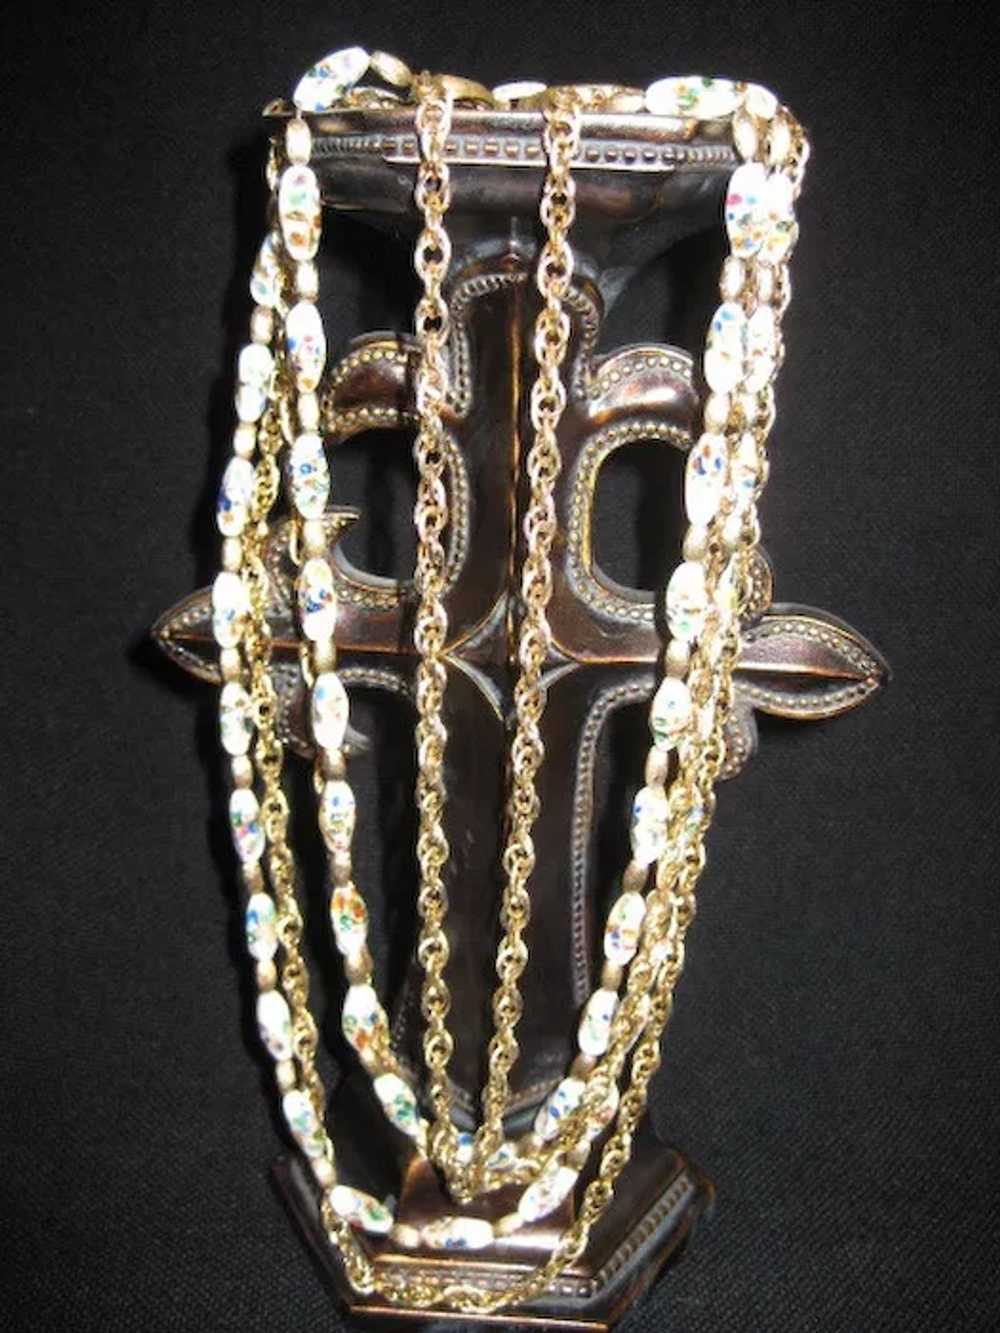 Vintage Five Strand Trifari Necklace - image 1